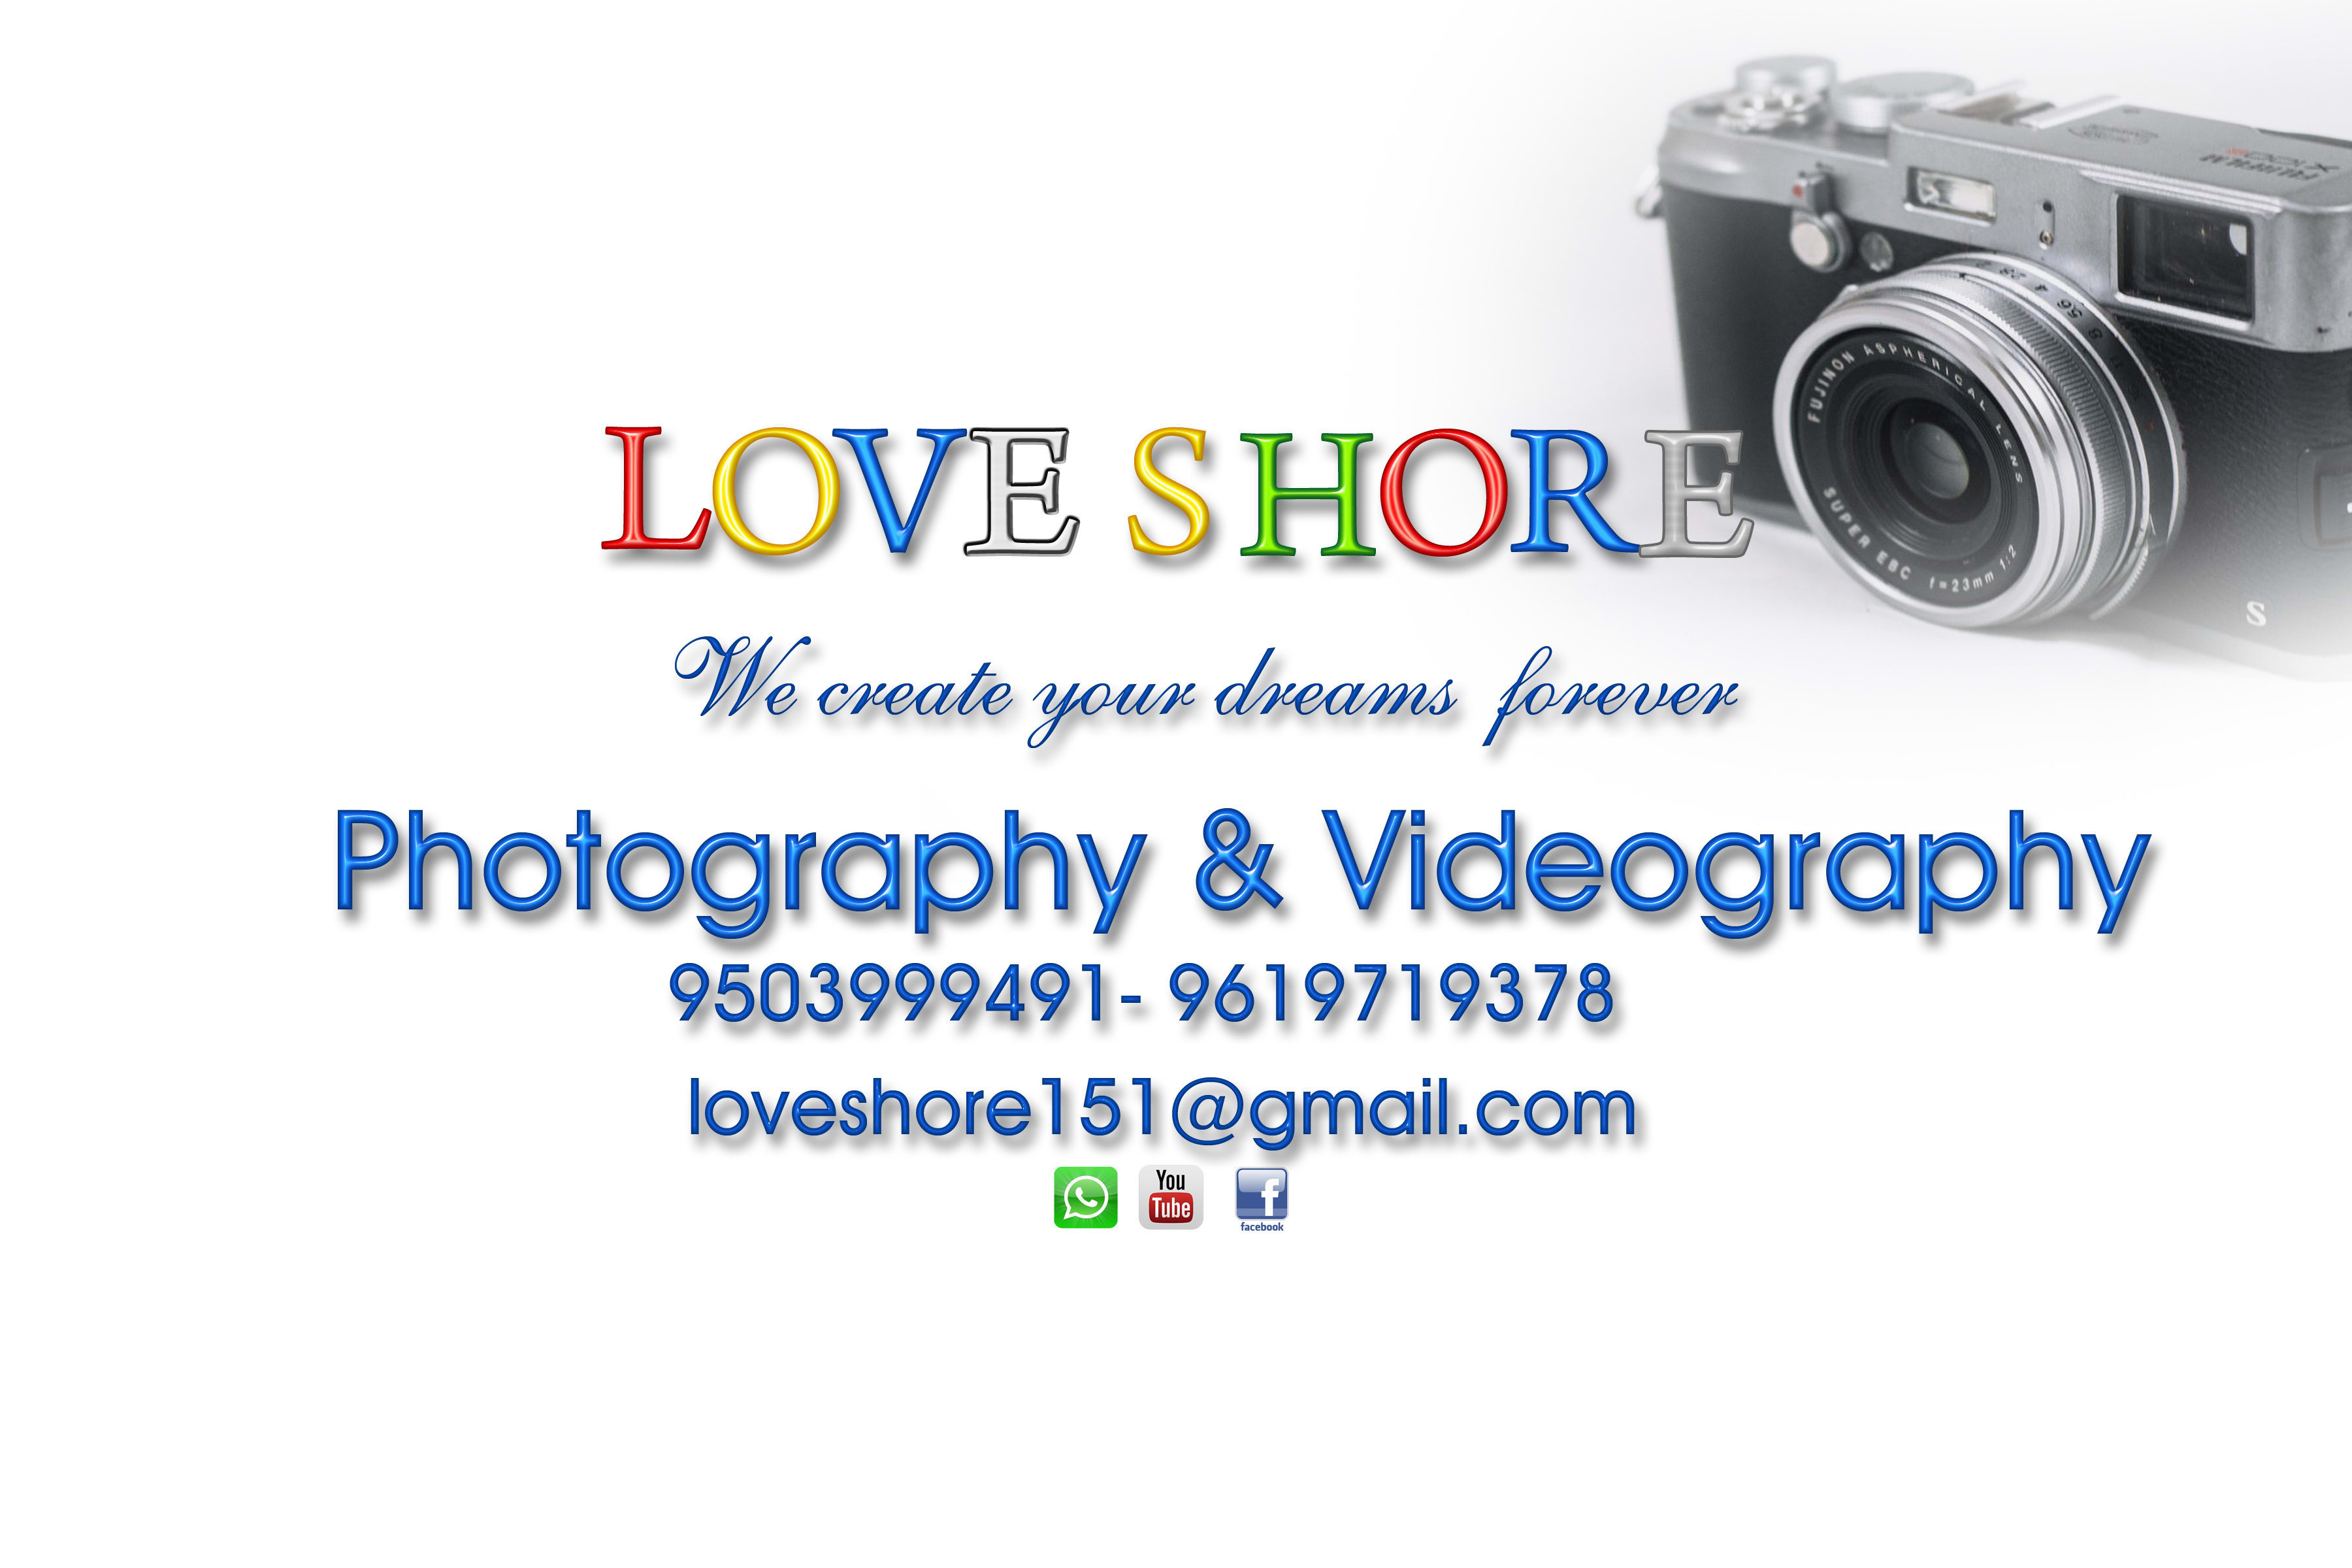 Loveshore Photography